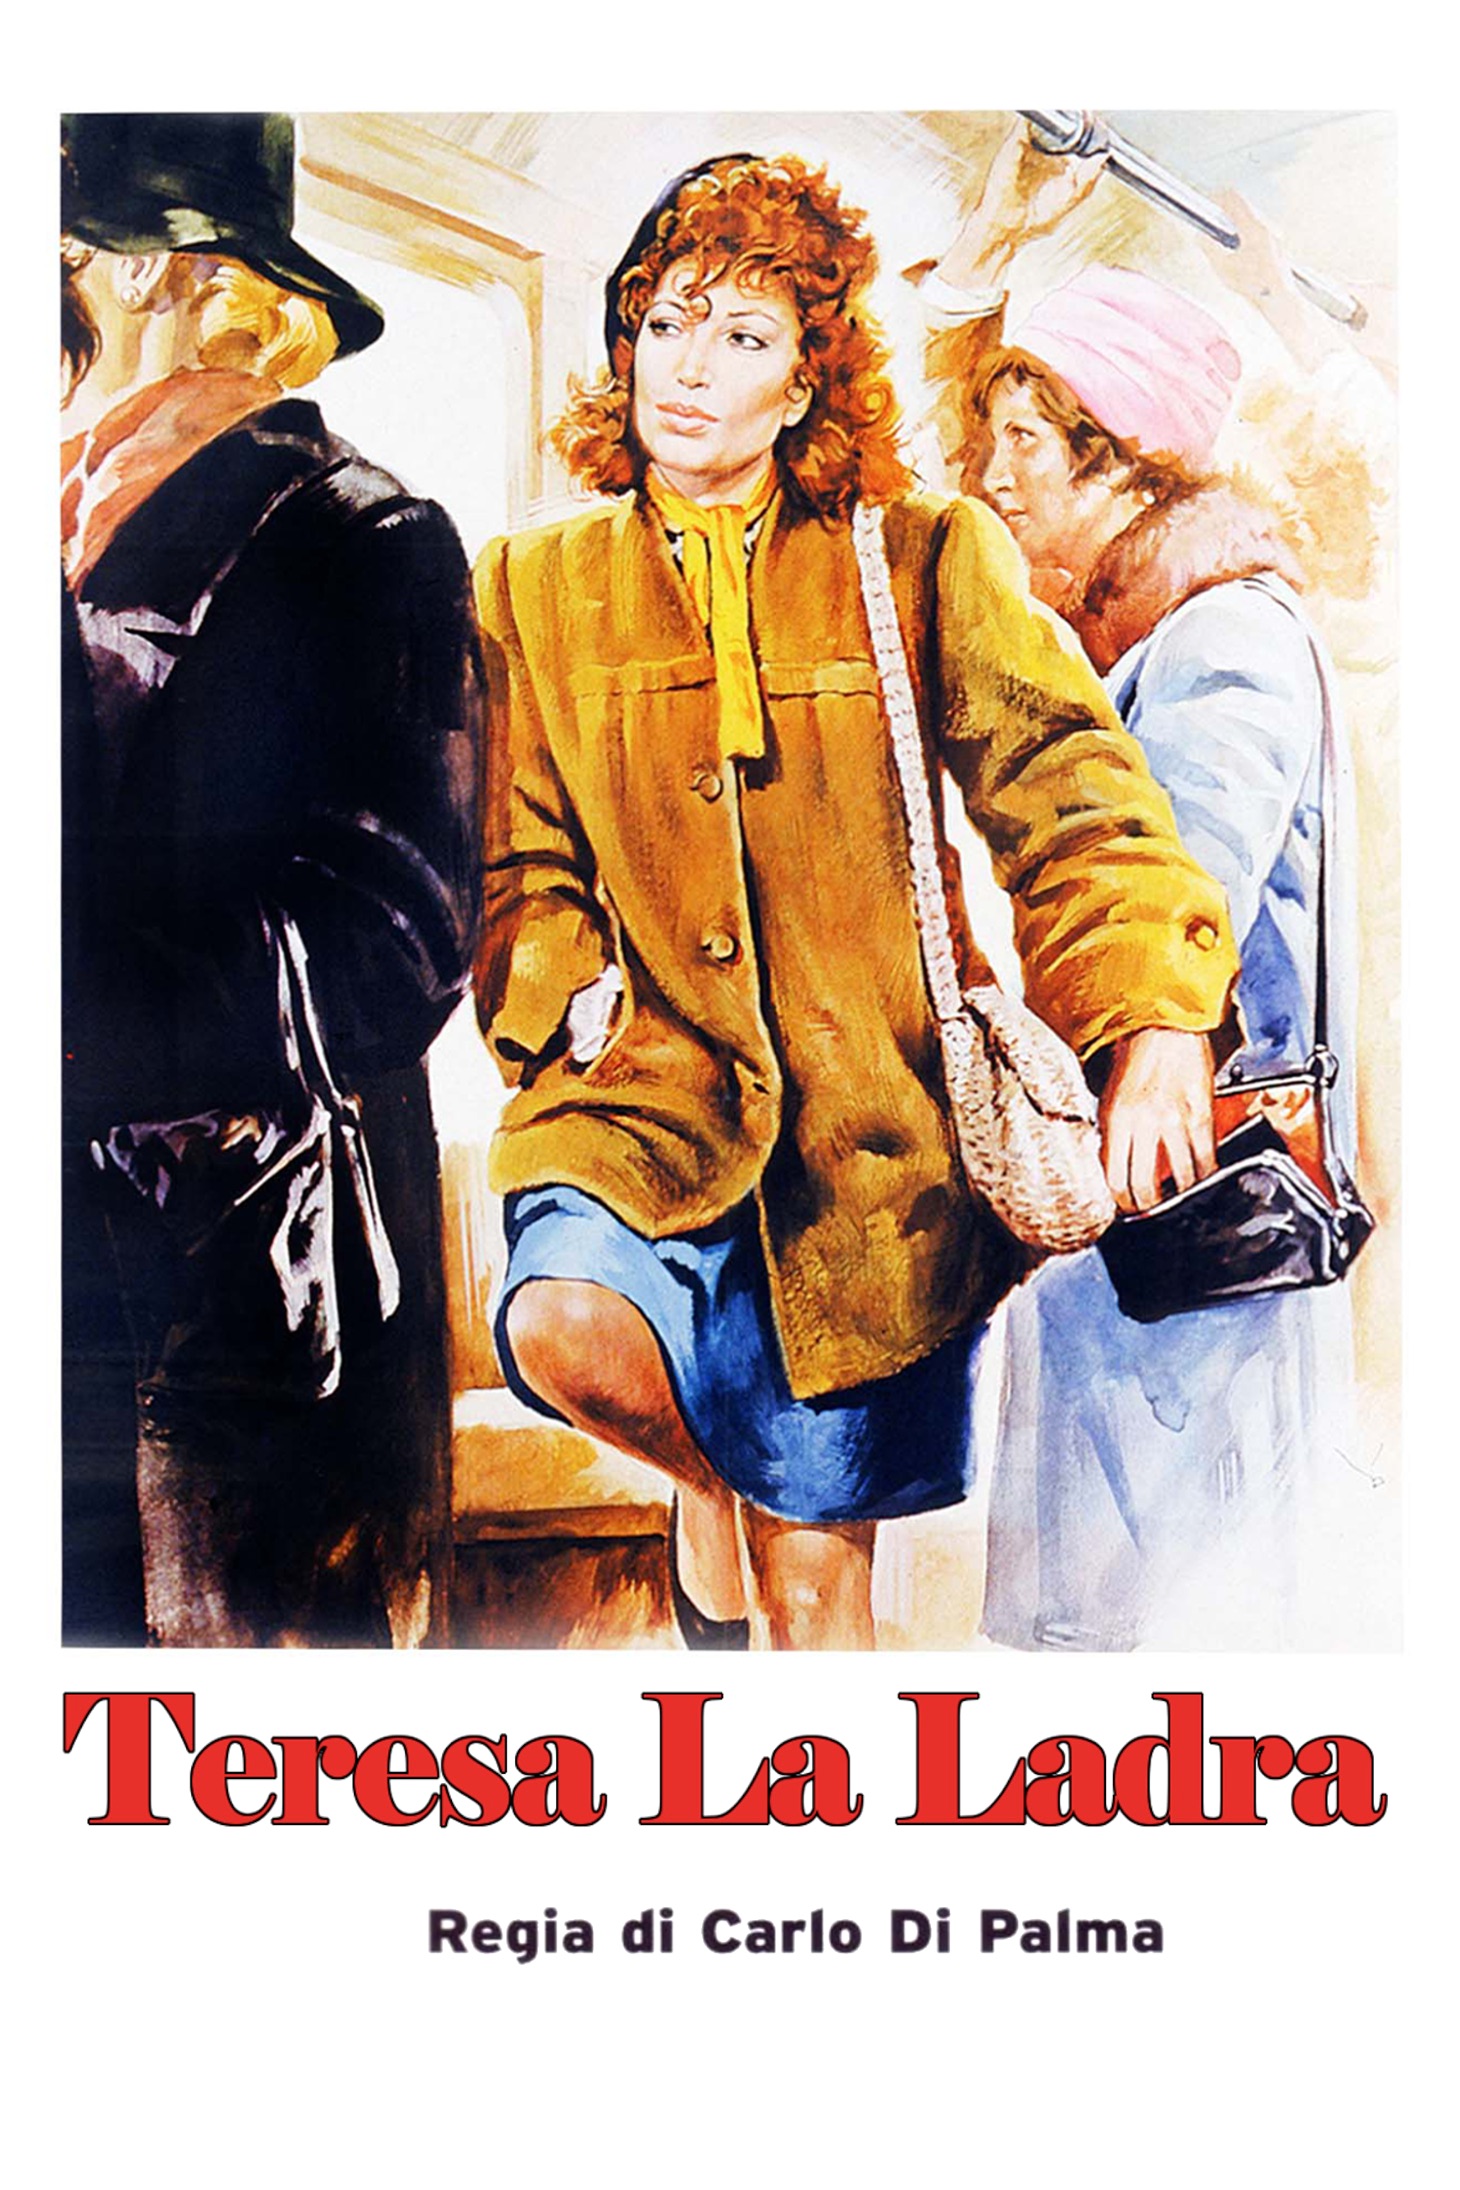 Teresa la ladra [HD] (1973)